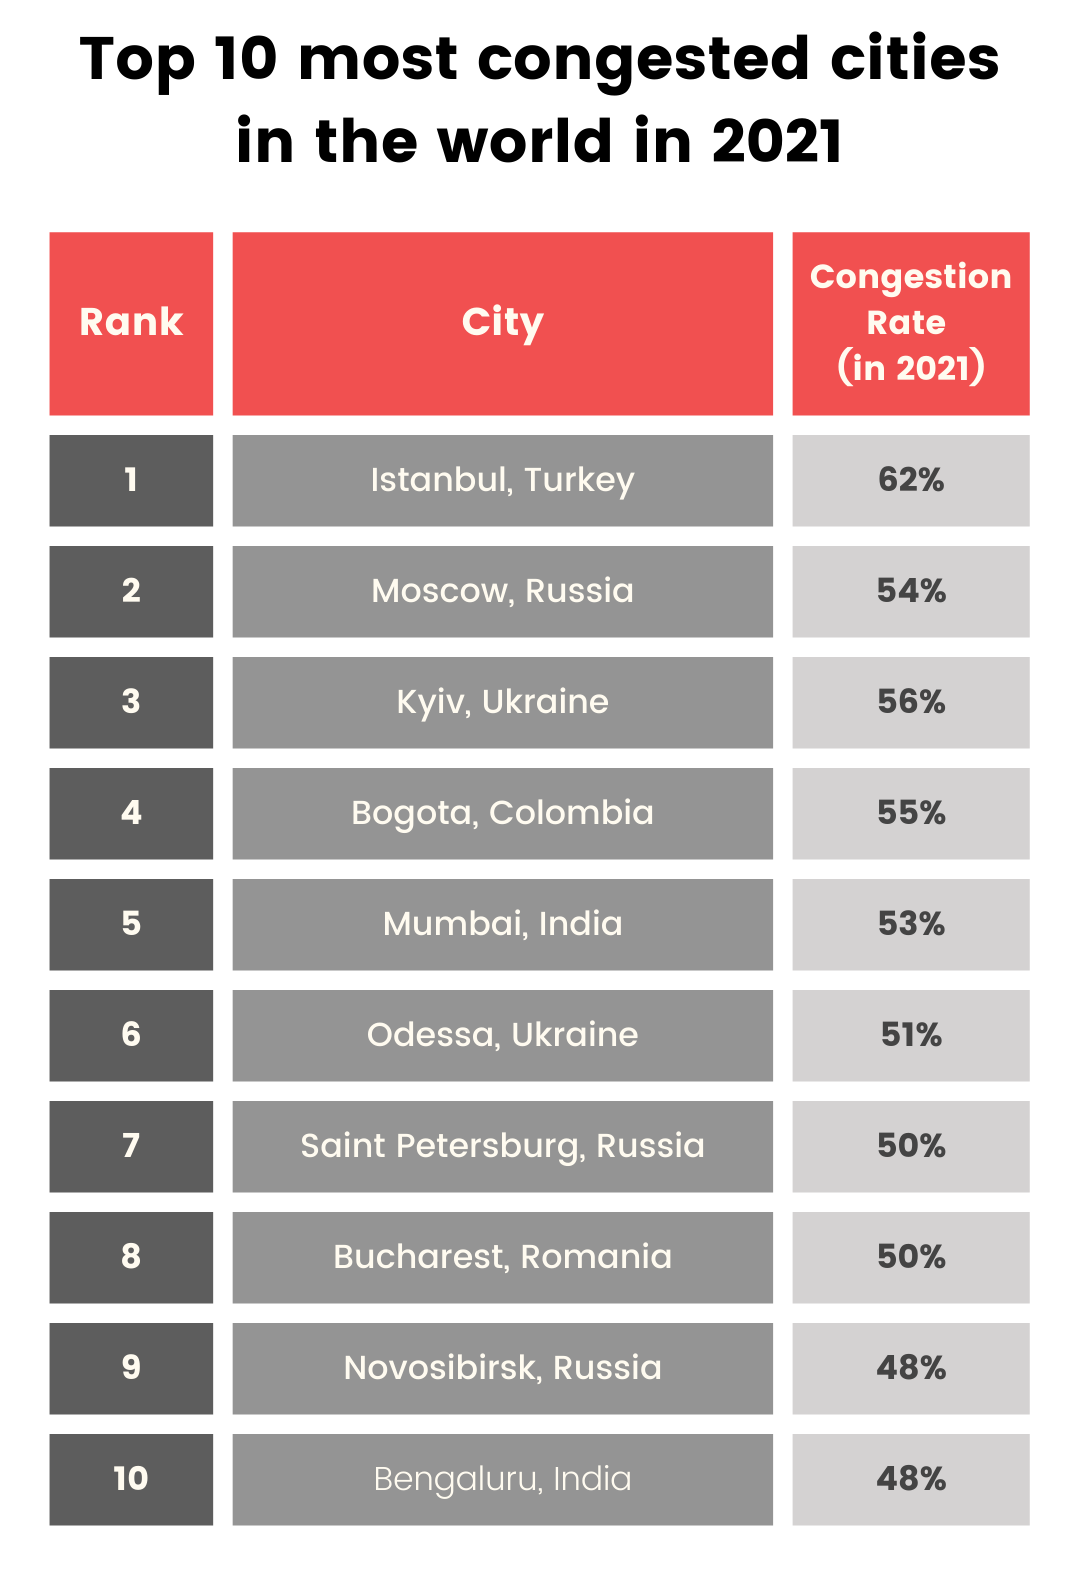 Congestion percentage across top 10 cities